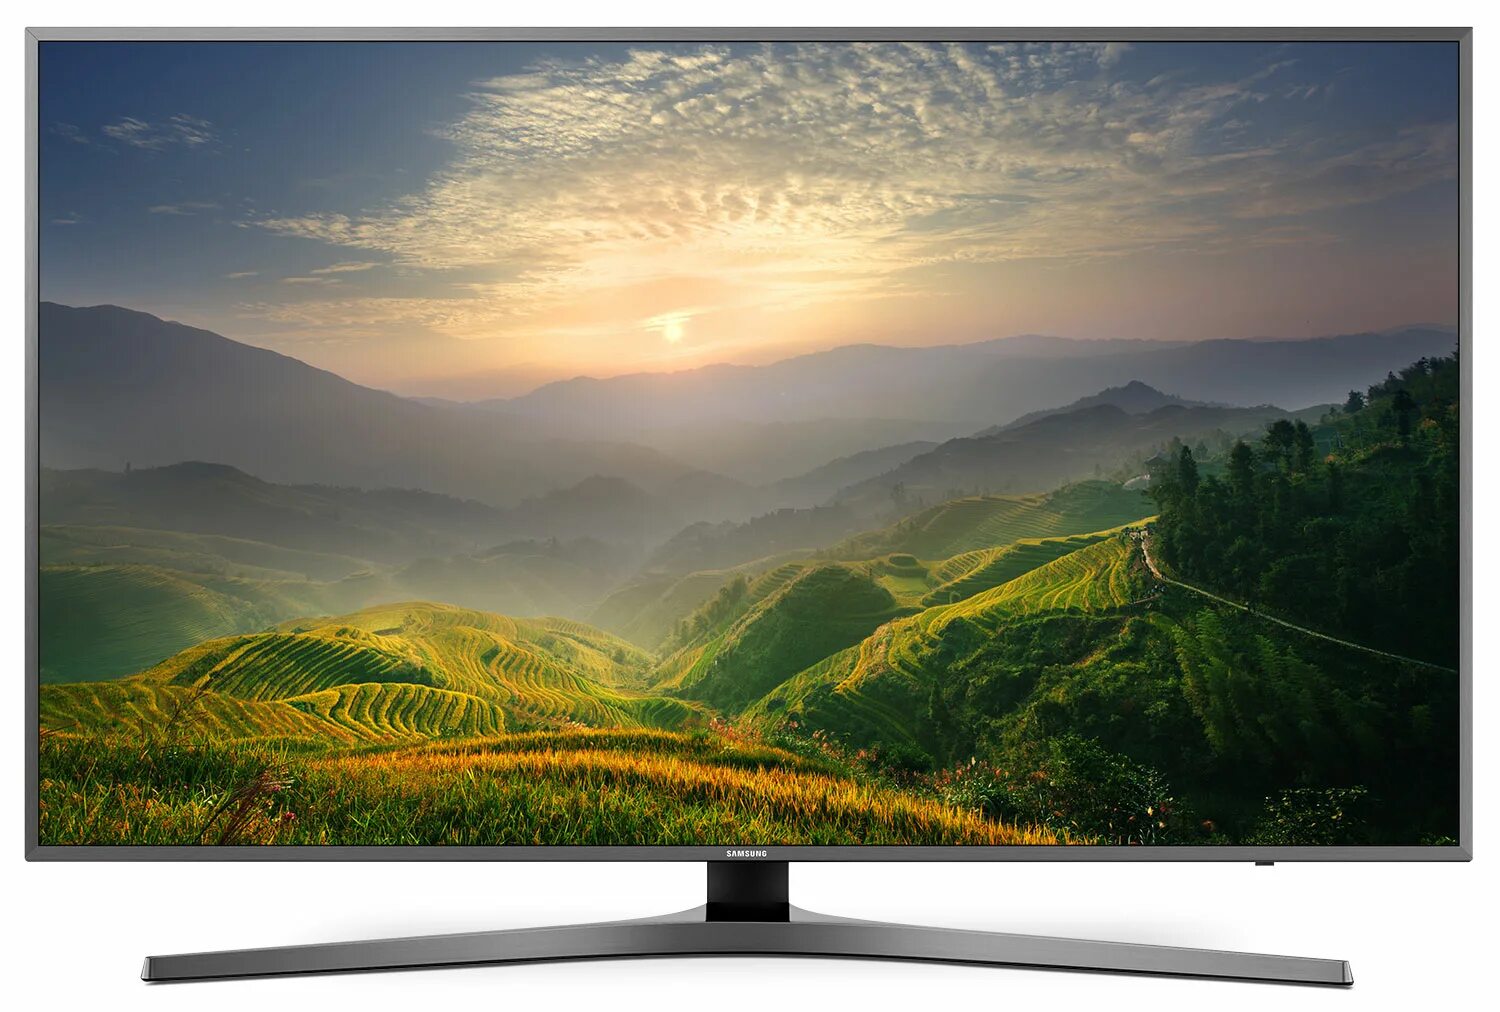 Samsung Smart TV 40. Samsung 32m9000 телевизор. Samsung Smart TV 32. Ue32t5300au Smart TV.